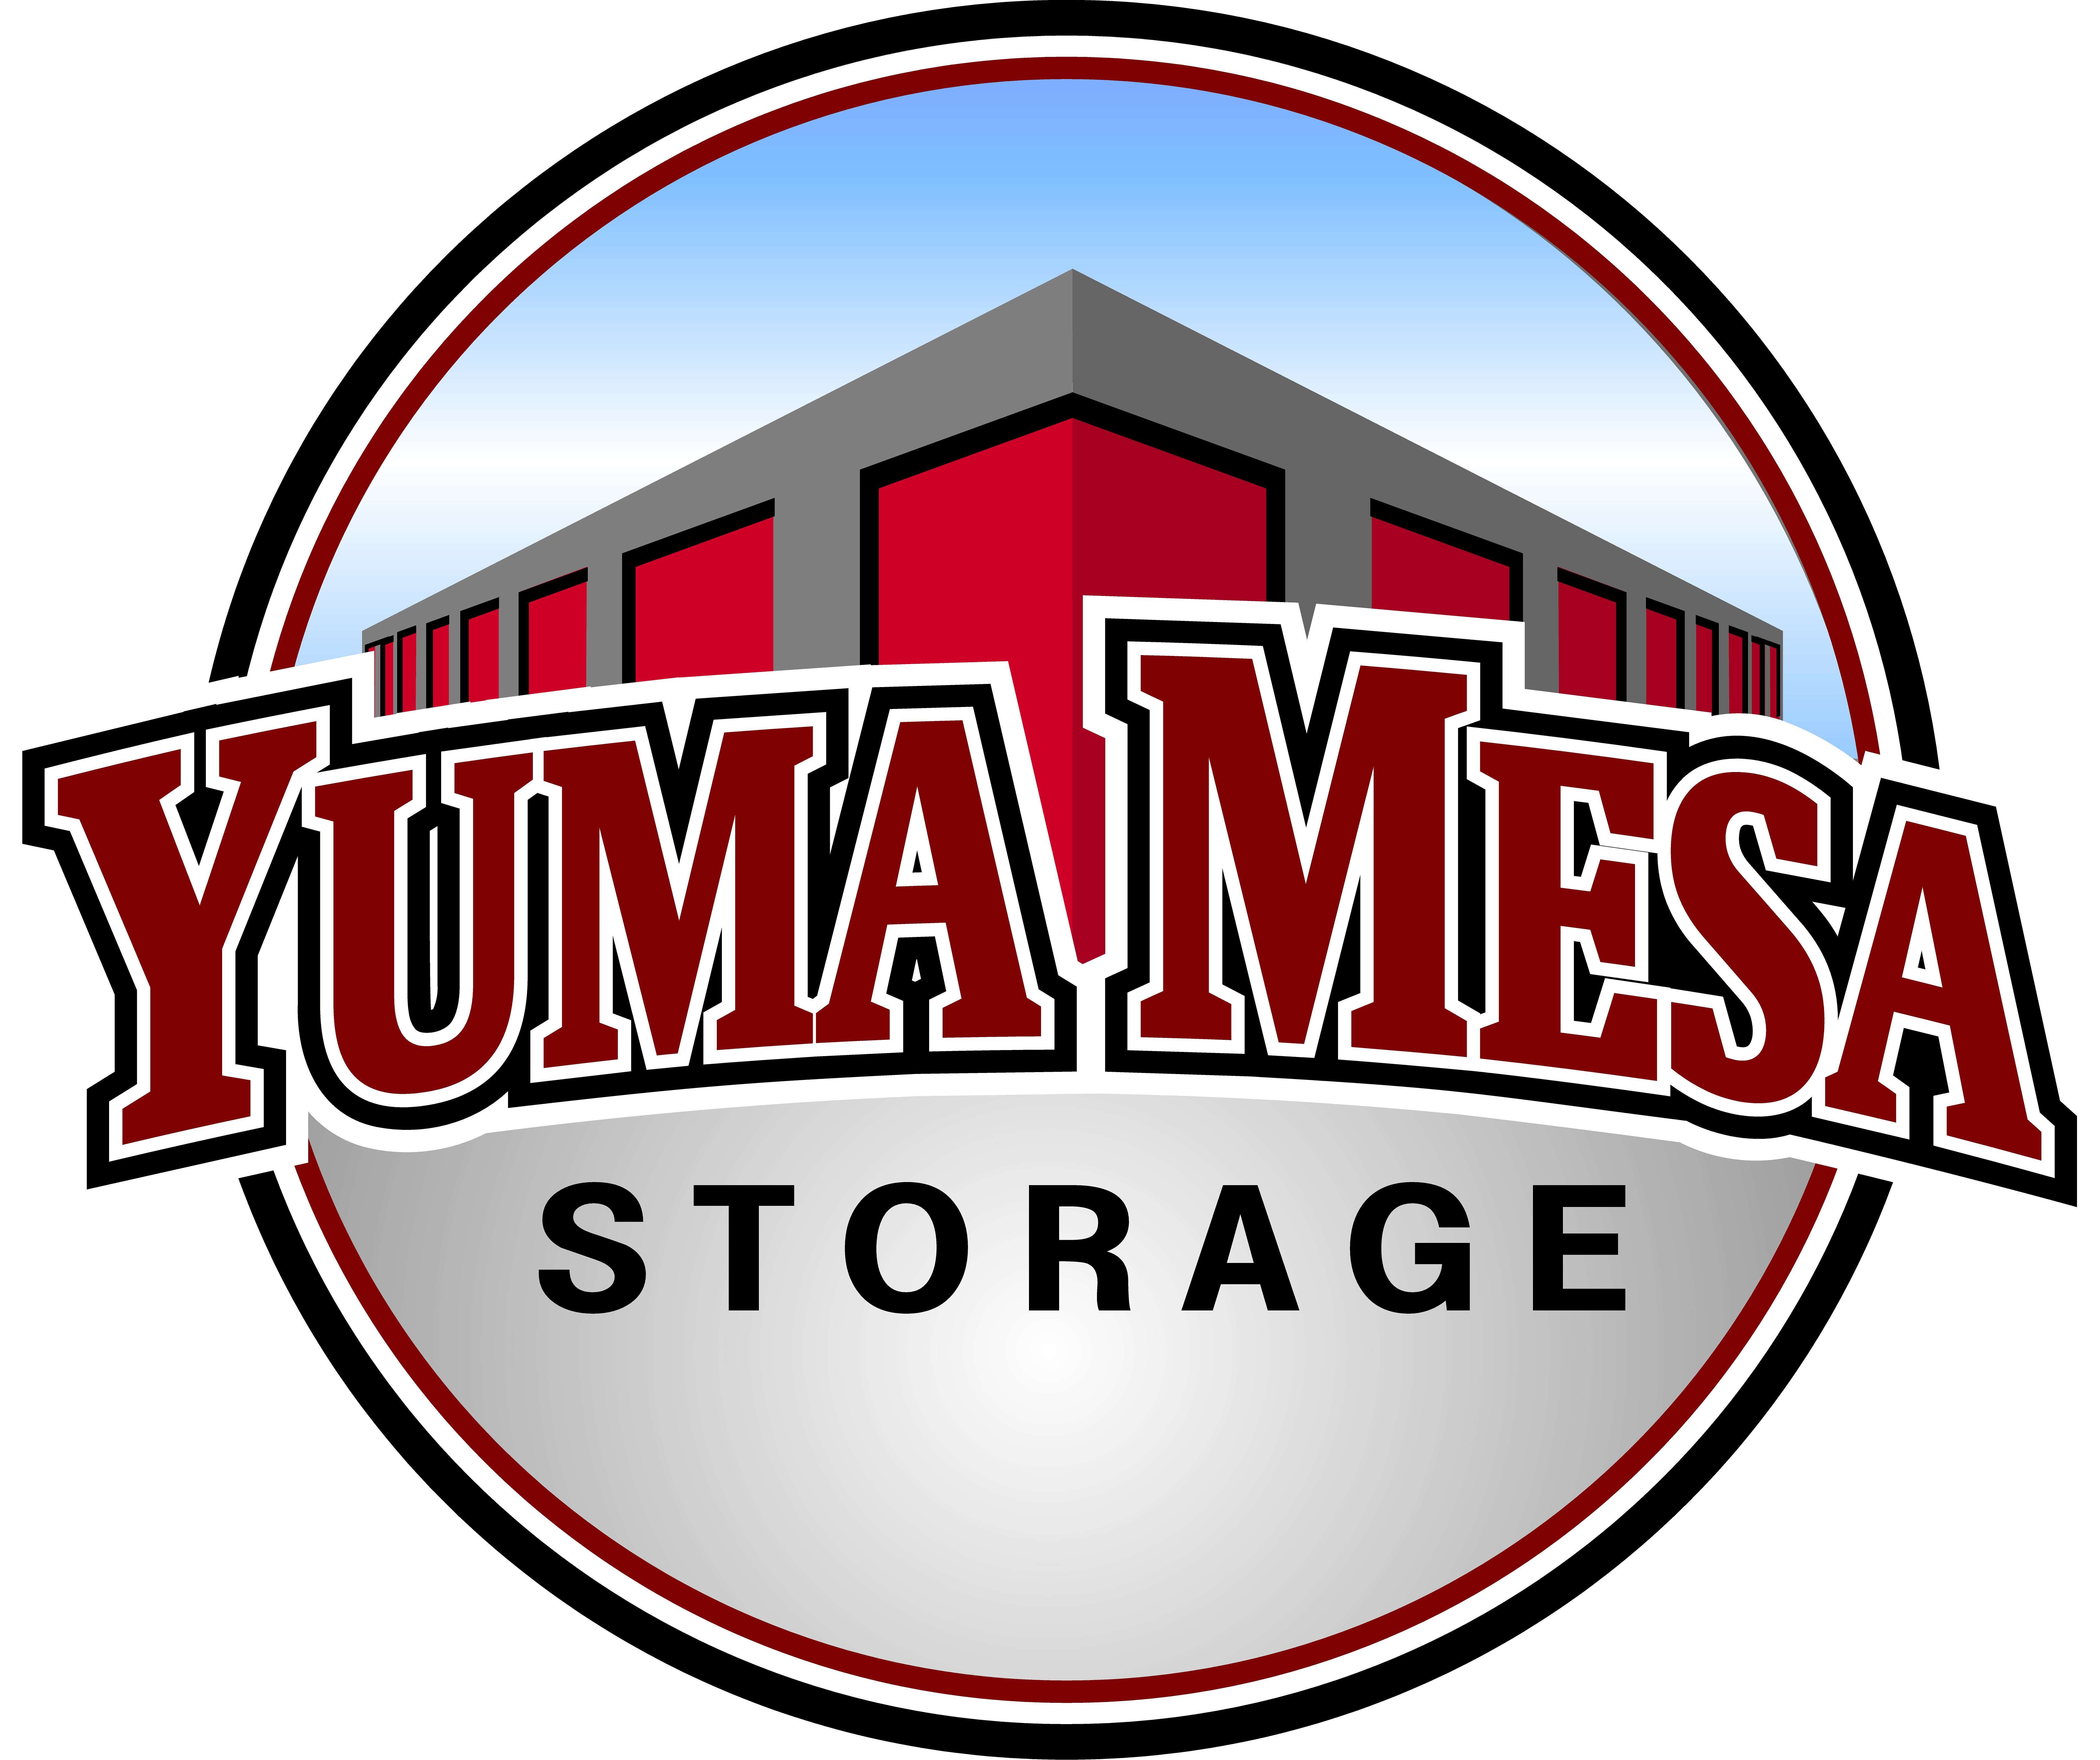 Affordable indoor Boat/RV/Vehicle Storage in Yuma, AZ